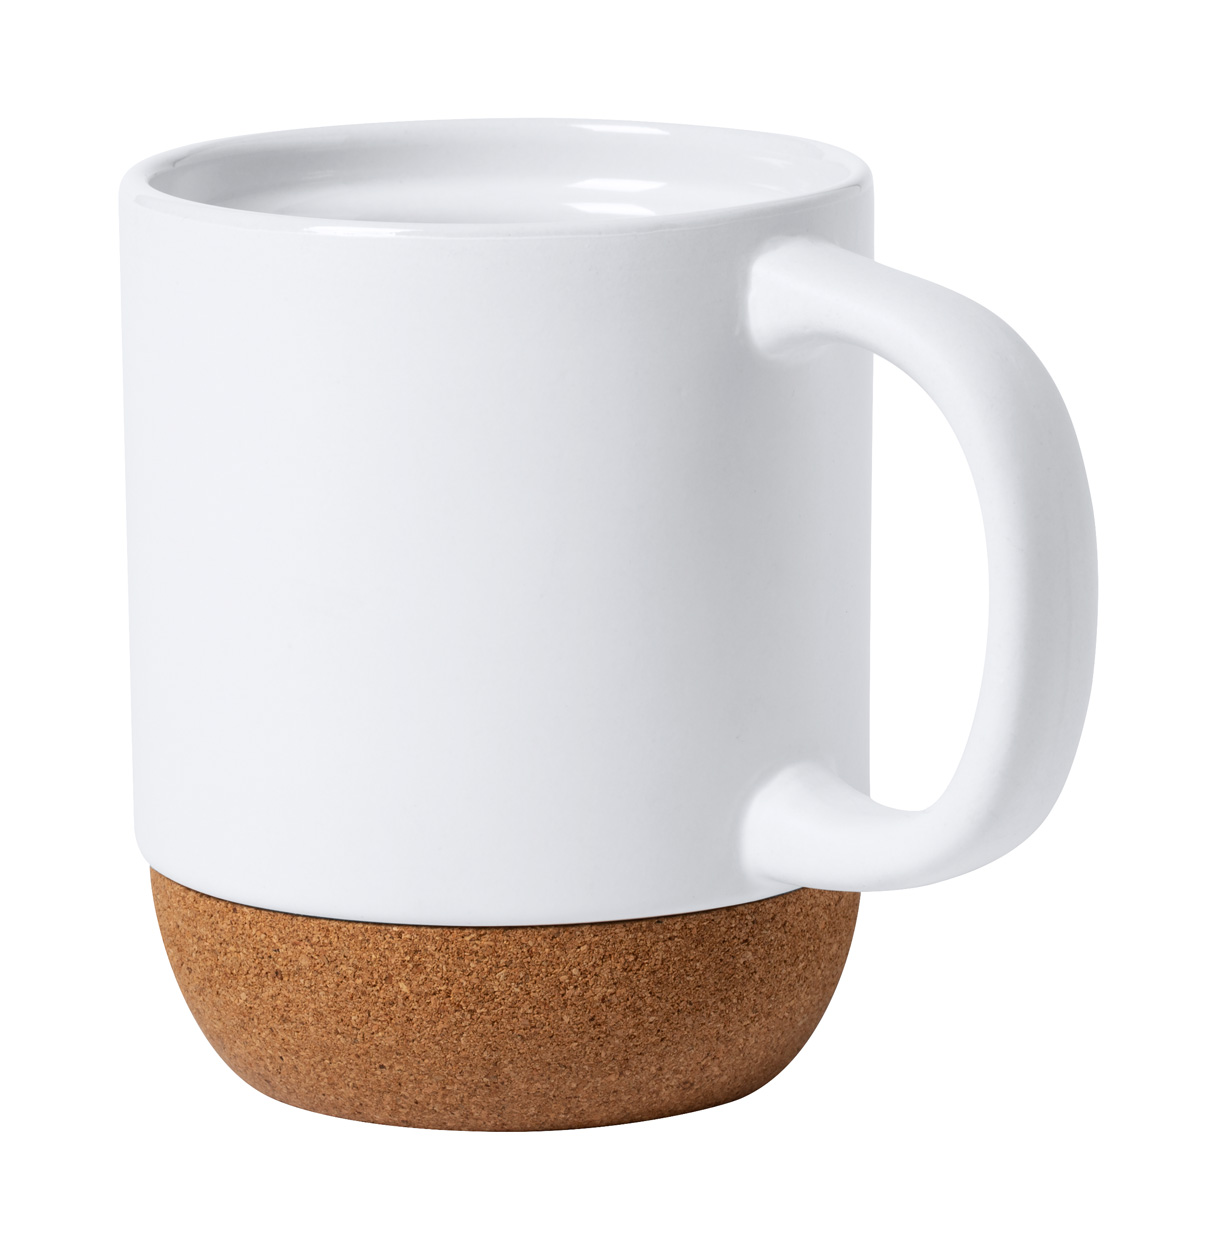 Ceramic mug ROSET suitable for sublimation, 420 ml - white / natural